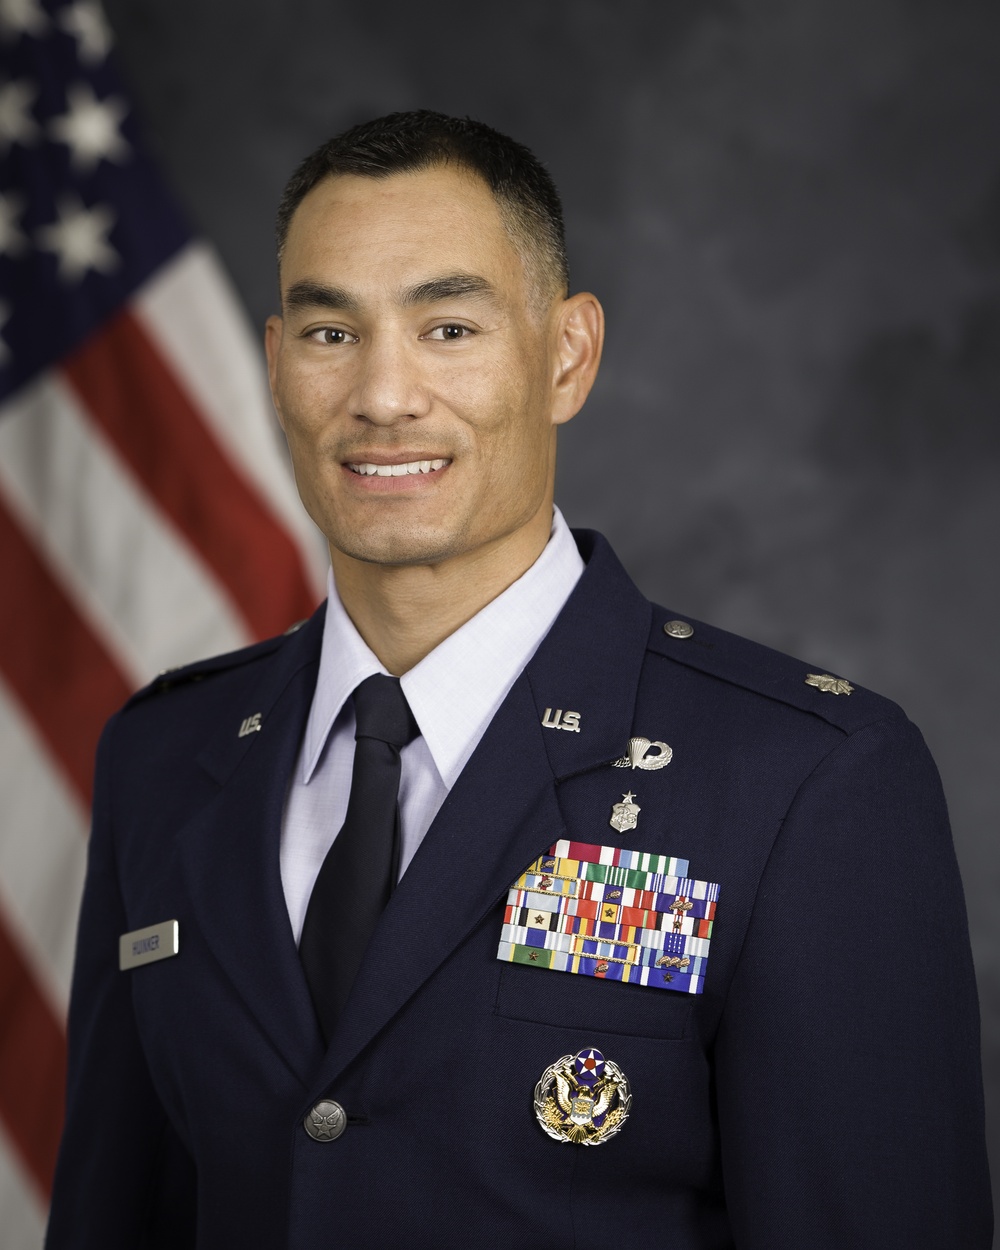 Official Portrait, Lt. Col. David Huinker, US Air Force